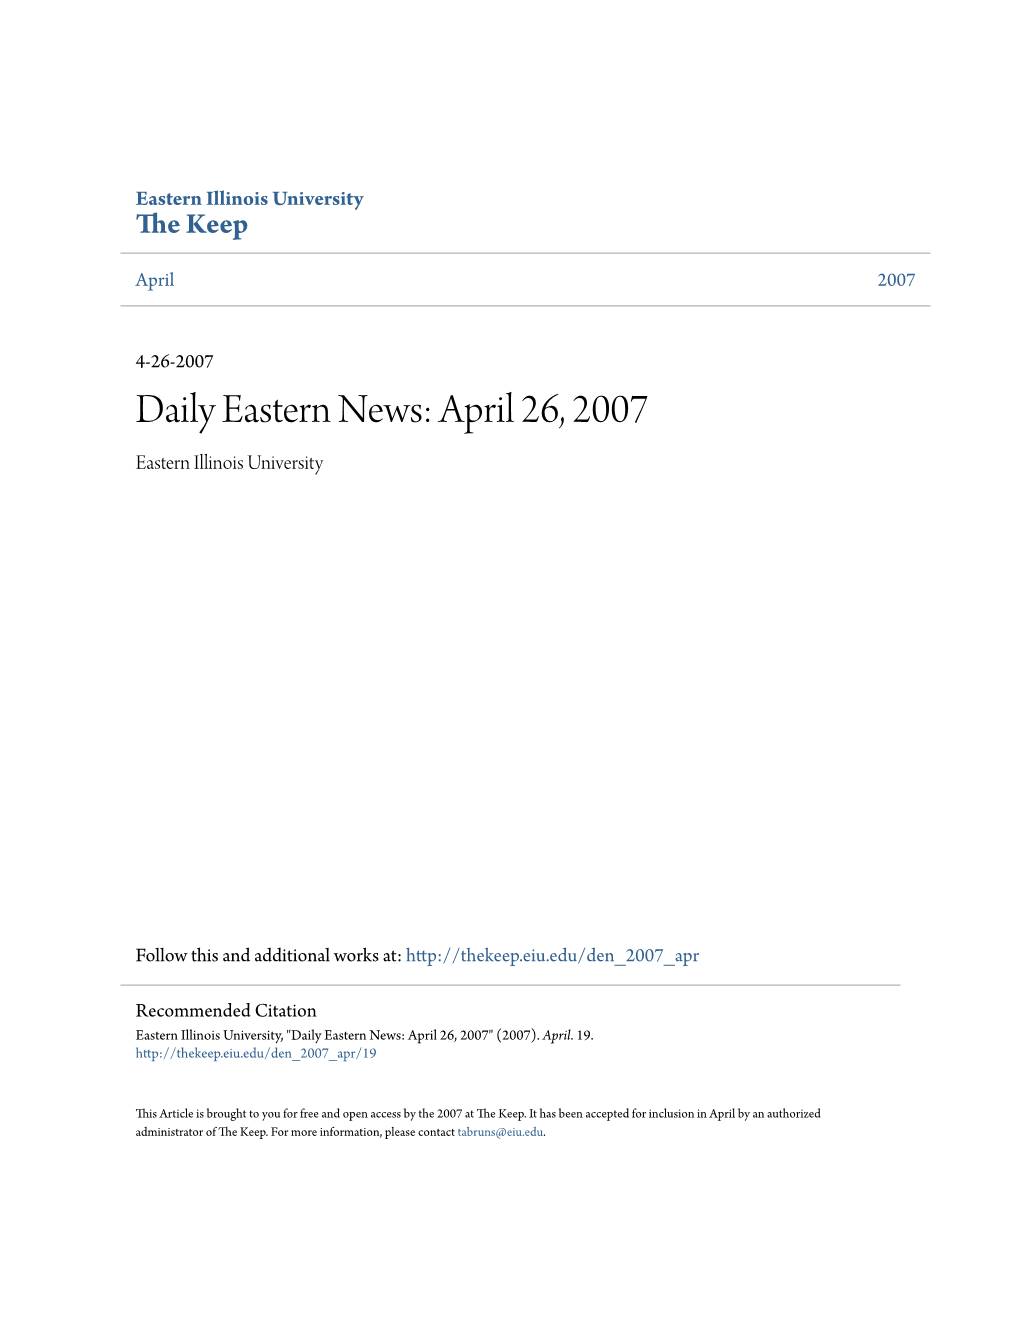 Daily Eastern News: April 26, 2007 Eastern Illinois University